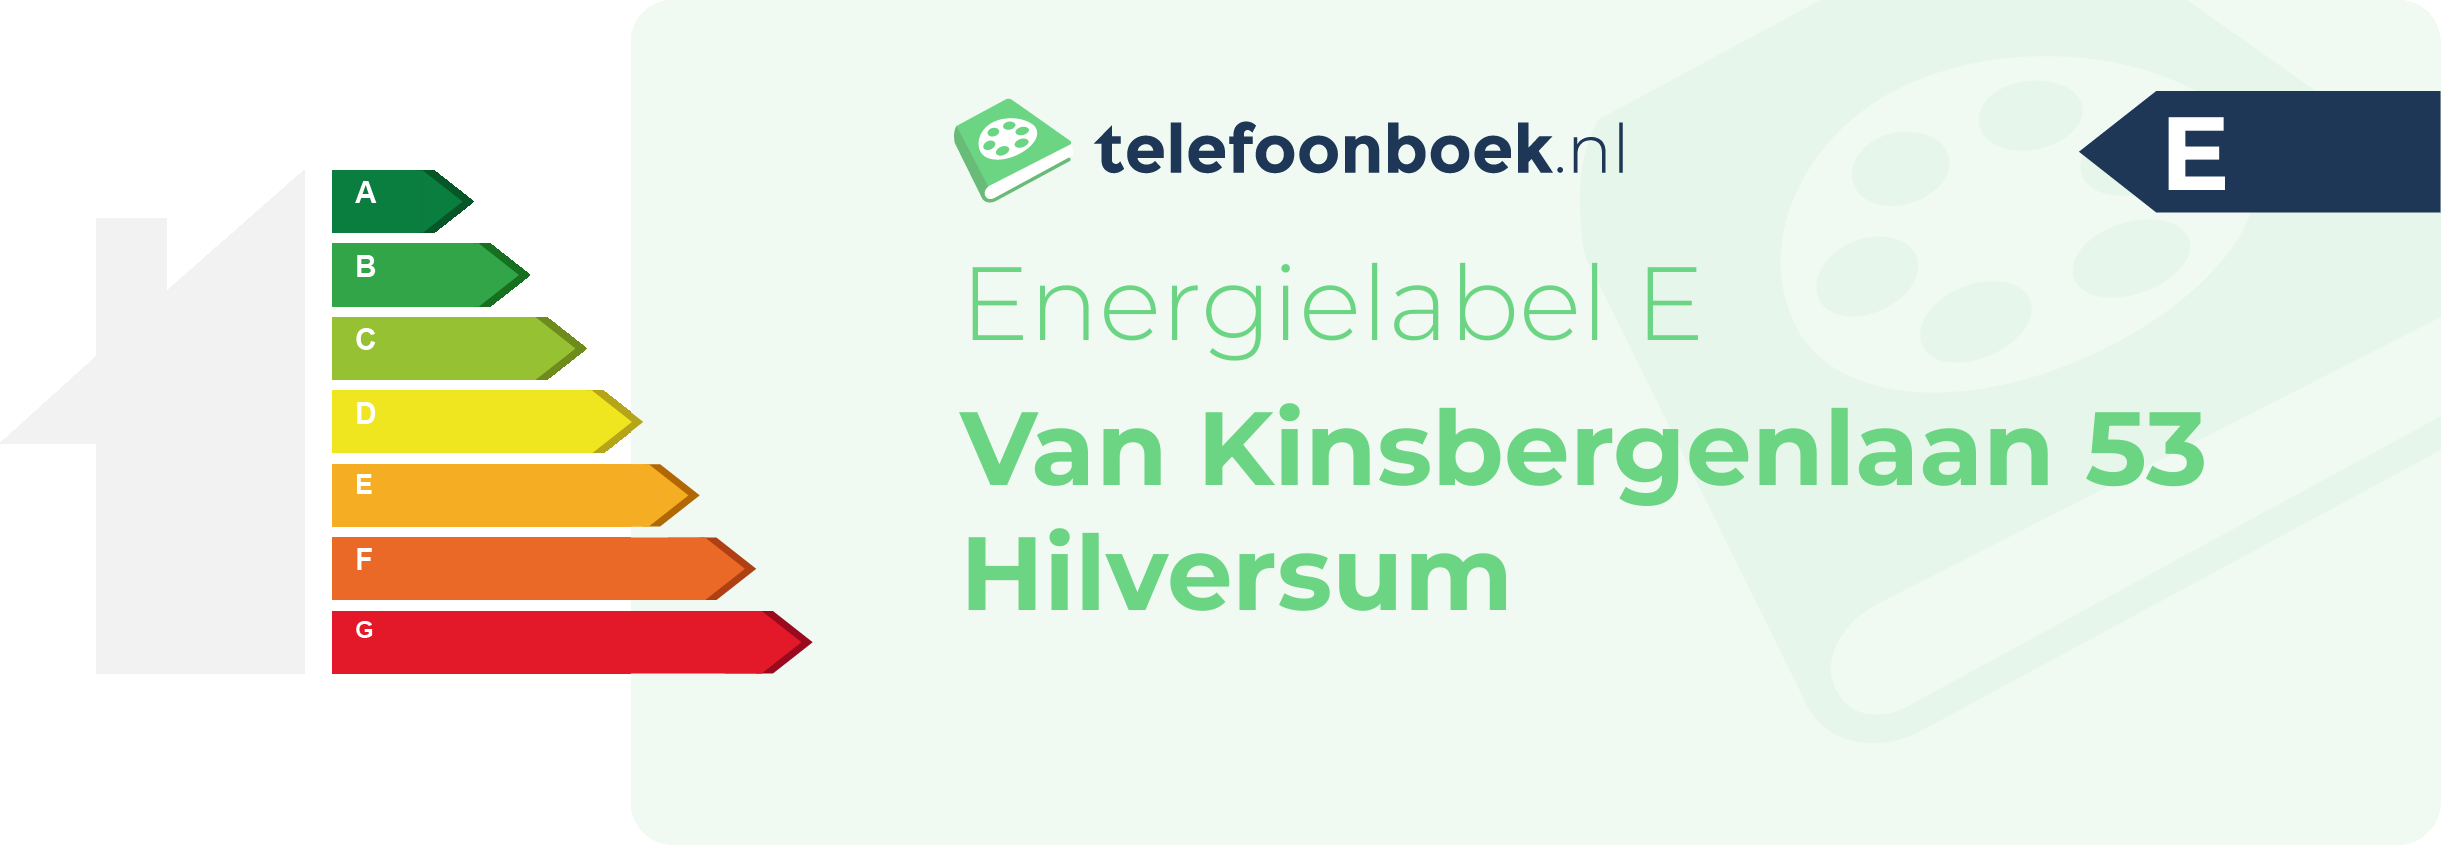 Energielabel Van Kinsbergenlaan 53 Hilversum